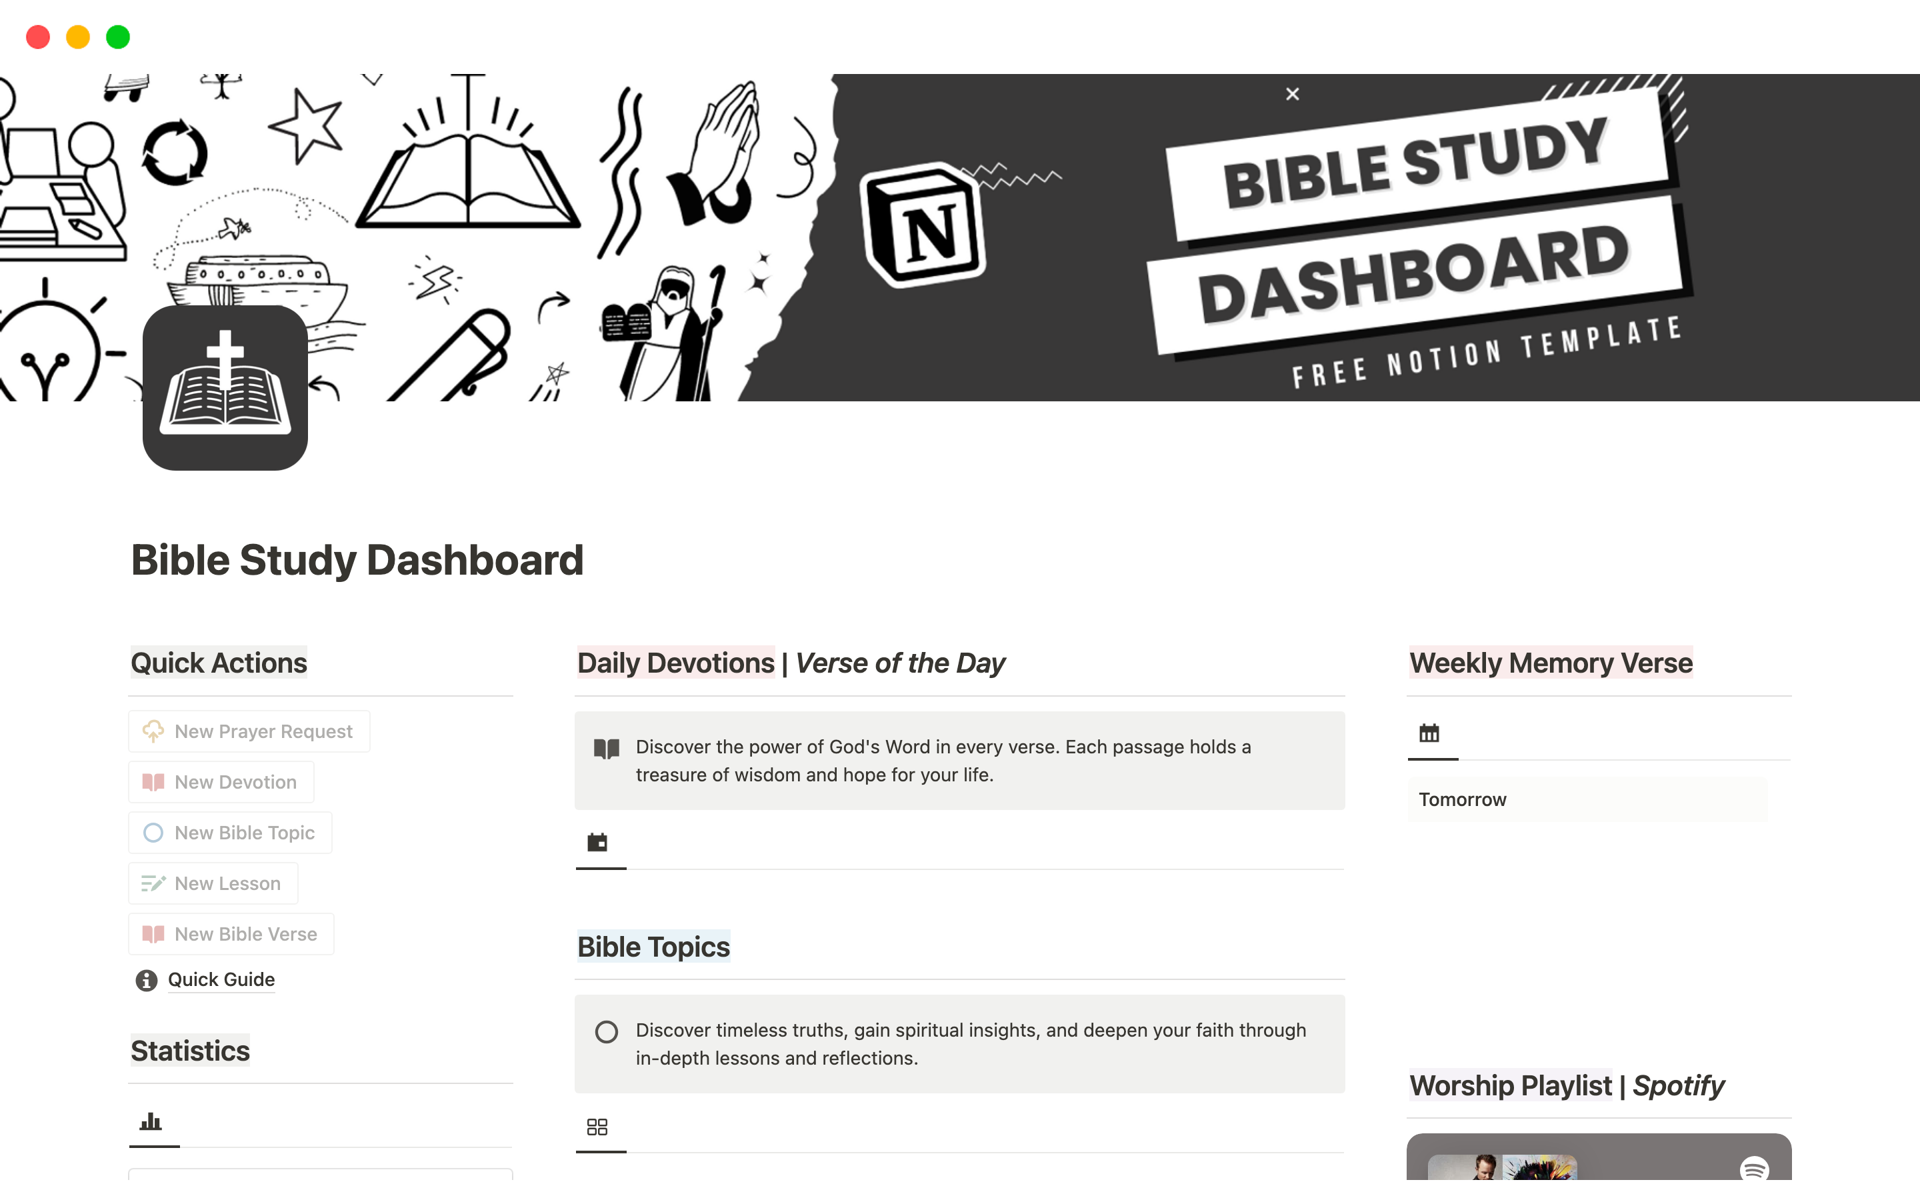 Aperçu du modèle de Bible Study Dashboard